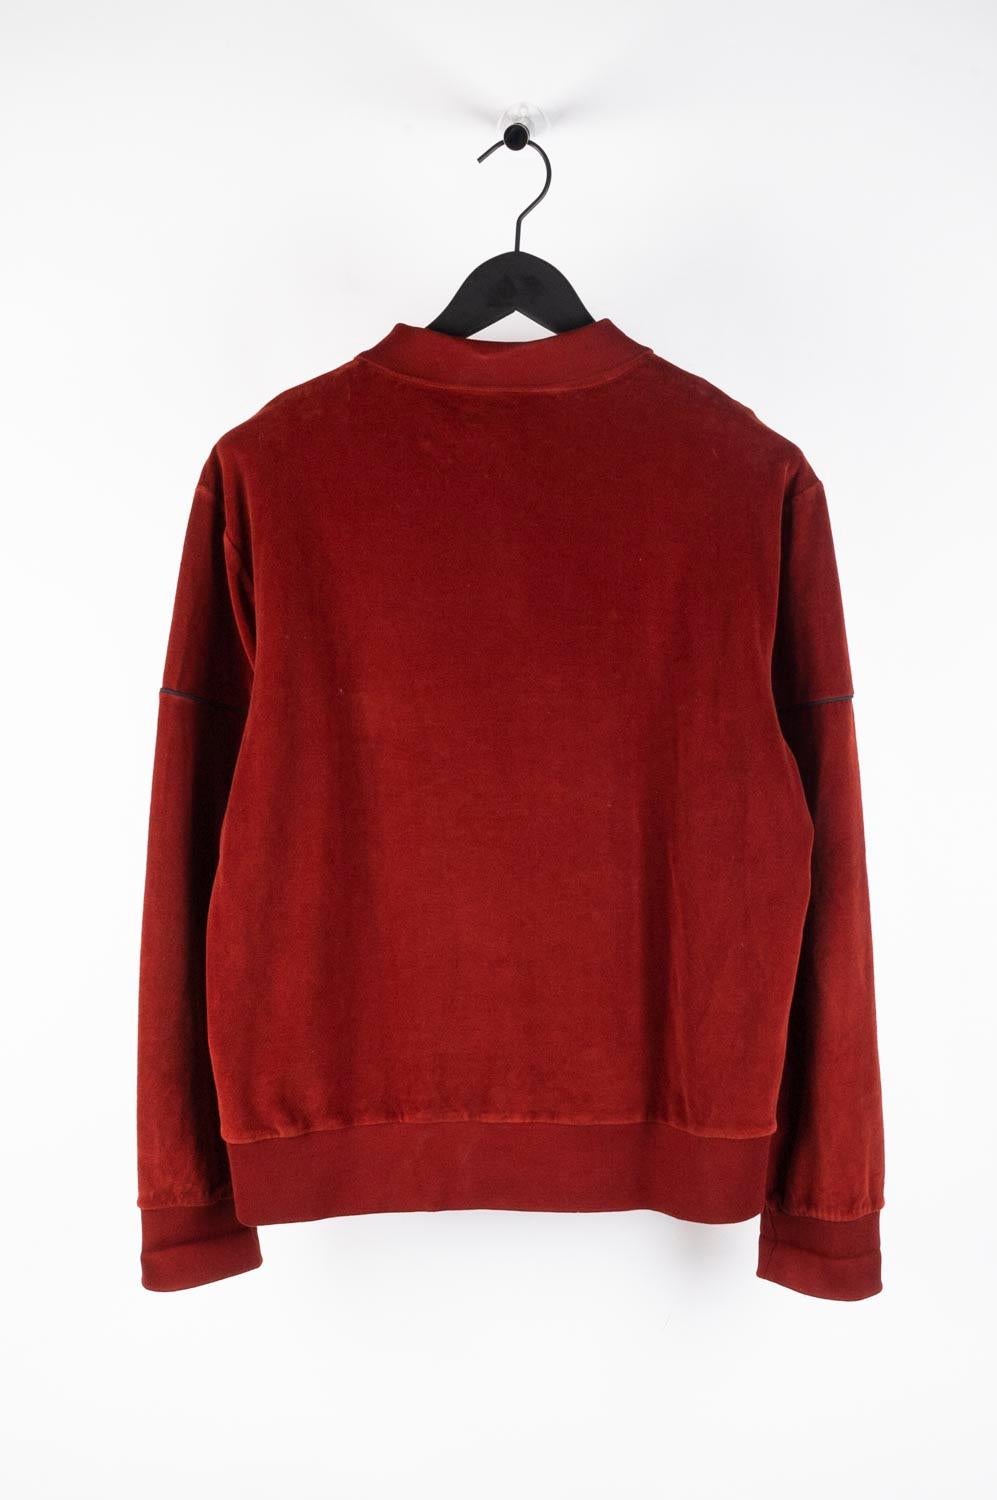 Prada Velour Men Jumper Sweatshirt Top Size XL S492 For Sale 1